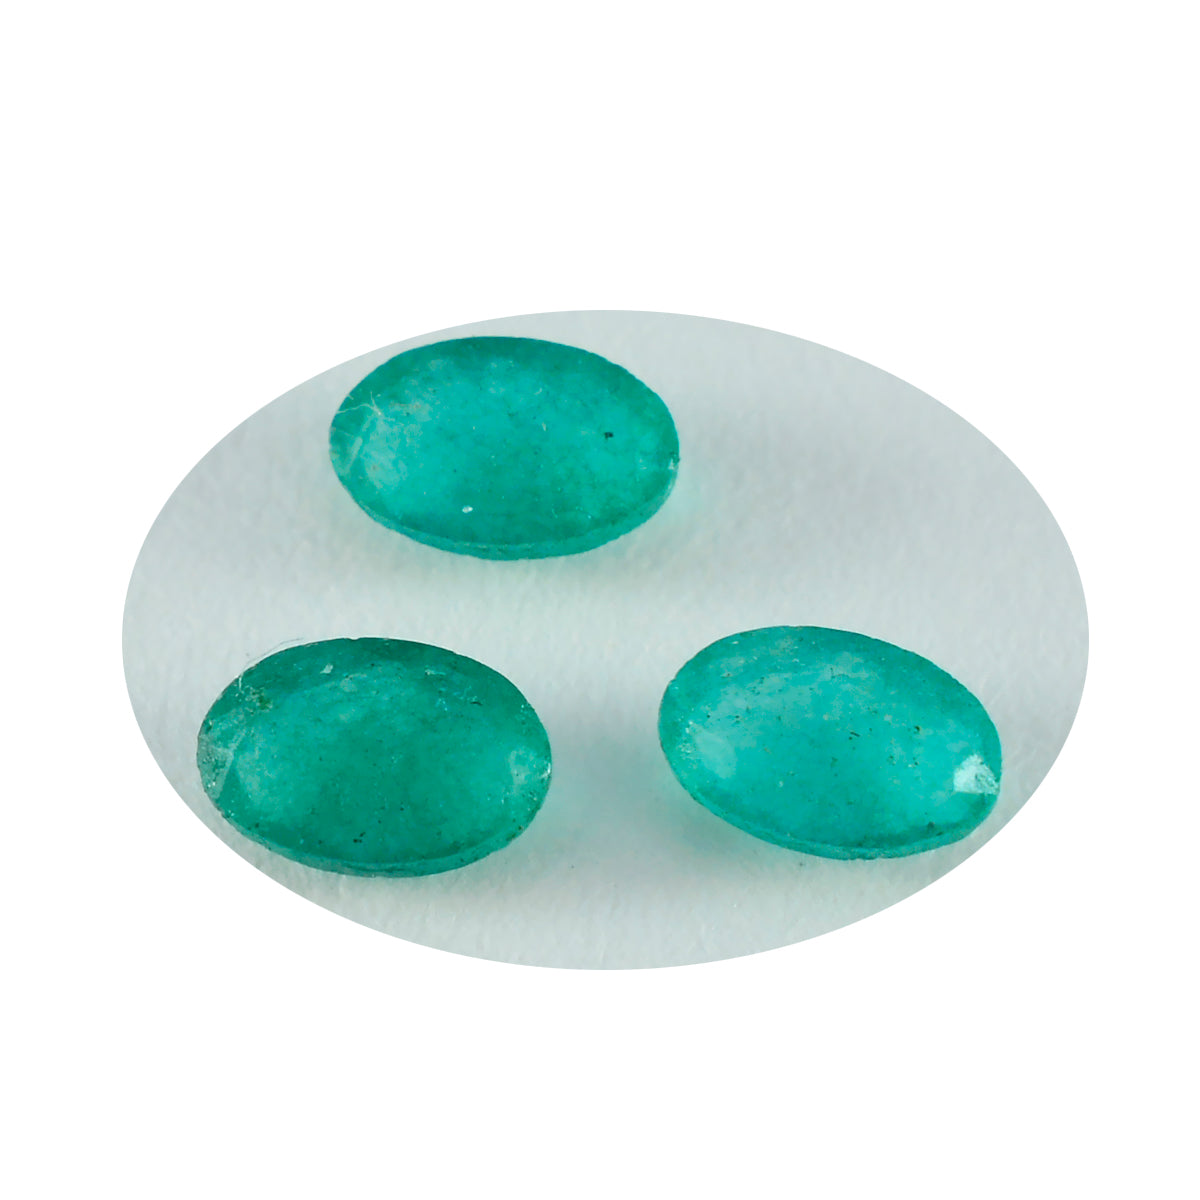 Riyogems 1PC echte groene jaspis gefacetteerd 7x9 mm ovale vorm fantastische kwaliteitsedelstenen